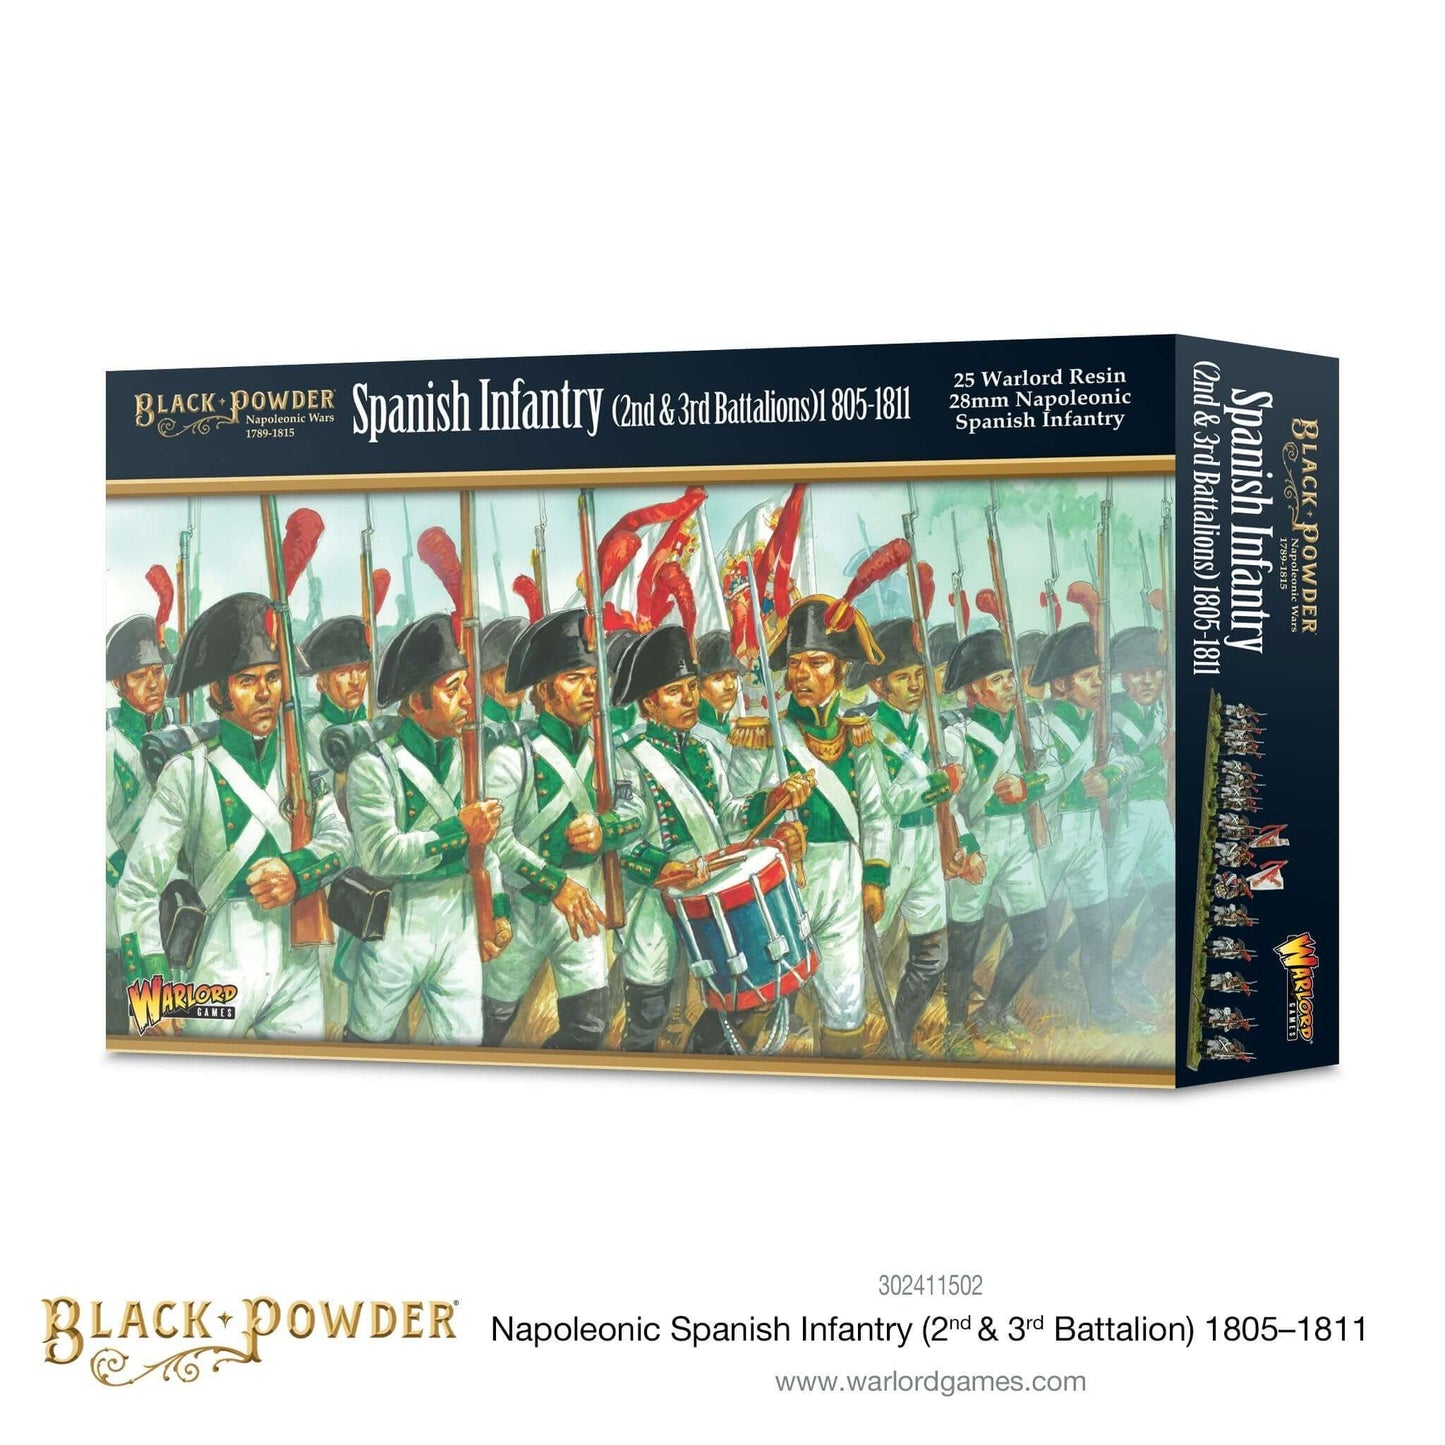 Black Powder: Napoleonic Spanish Infantry (2nd & 3rd Battalions) 1805-1811